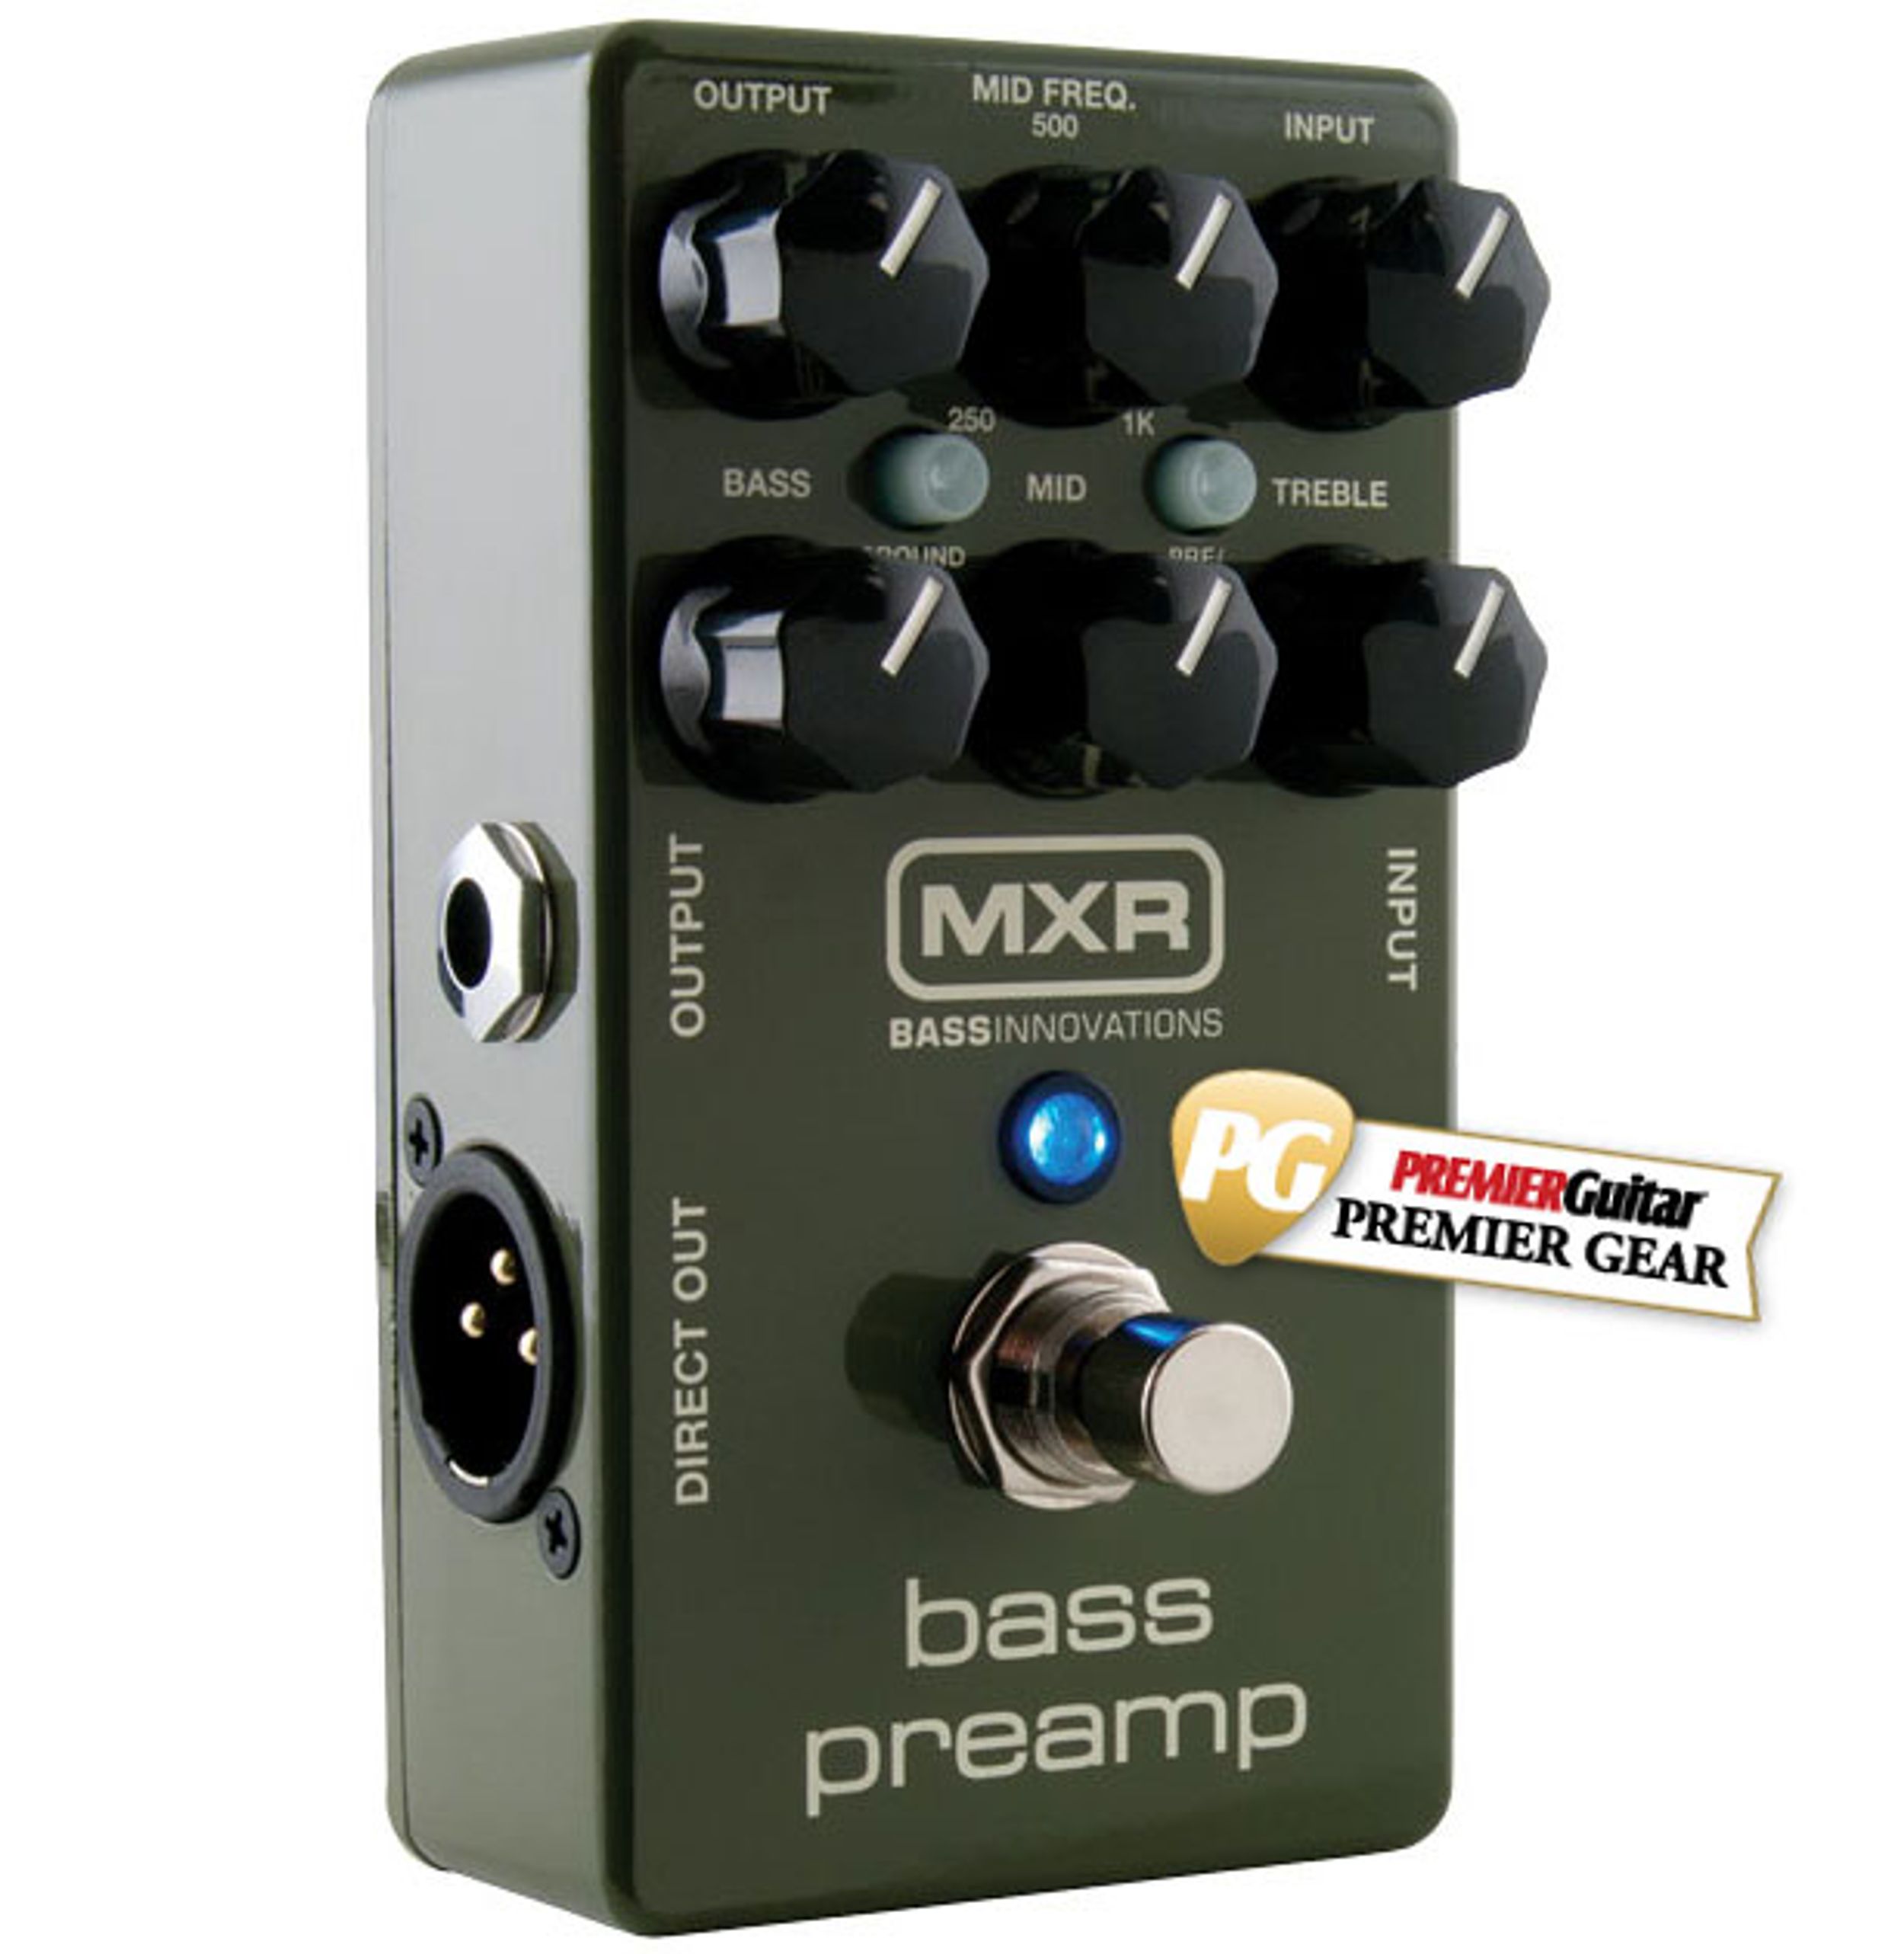 MXR Bass Preamp Review